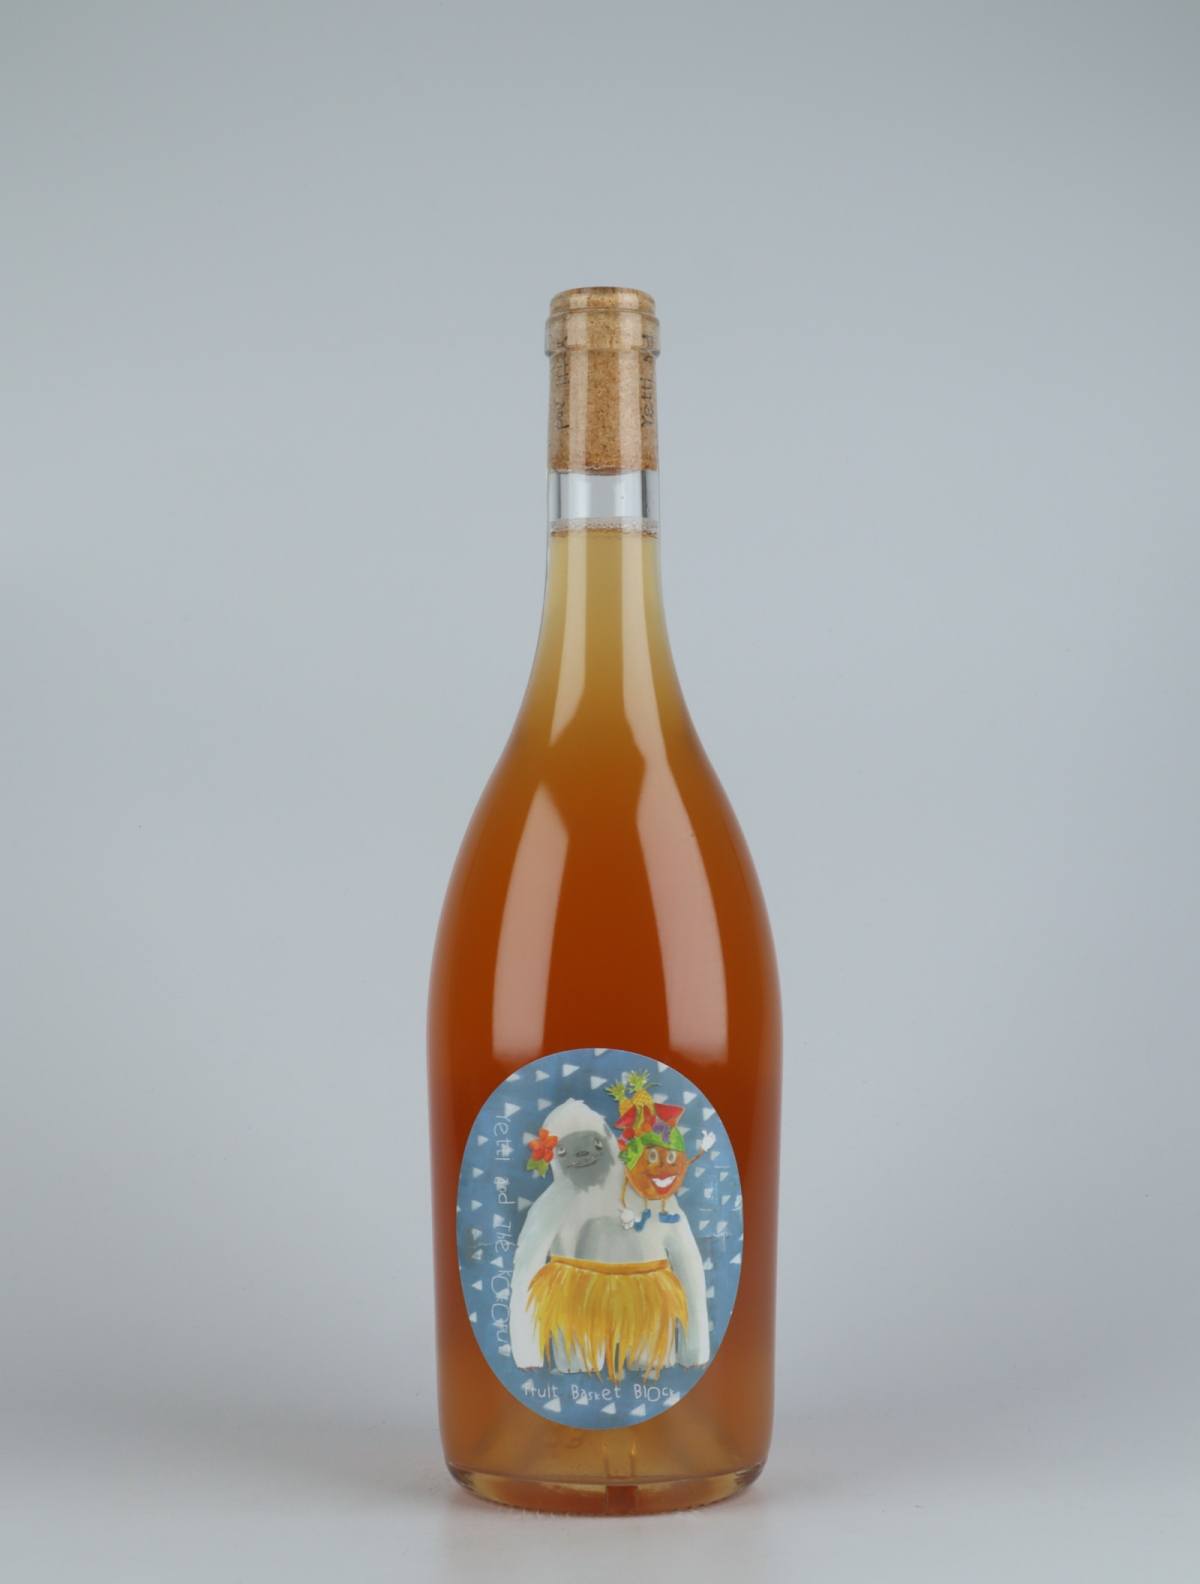 A bottle 2020 Fruit Basket White wine from Yetti and the Kokonut, Barossa Valley in Australia